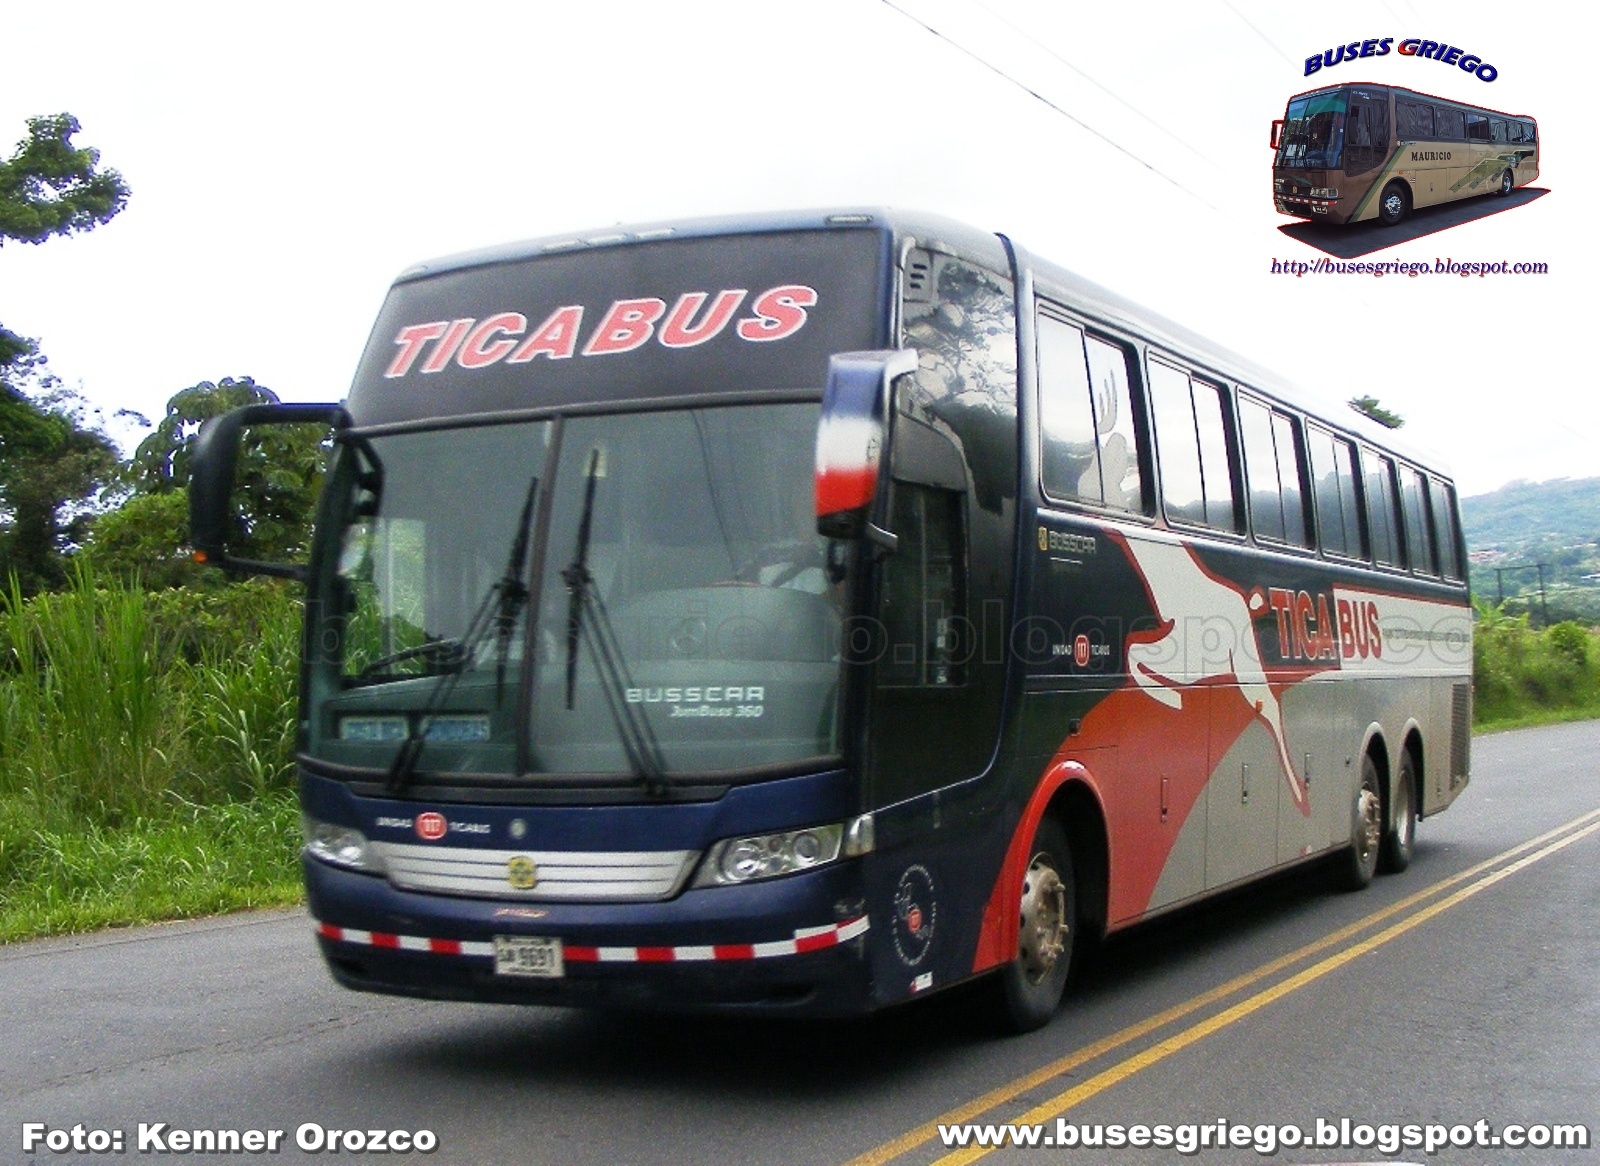 Busscar JumBuss 360